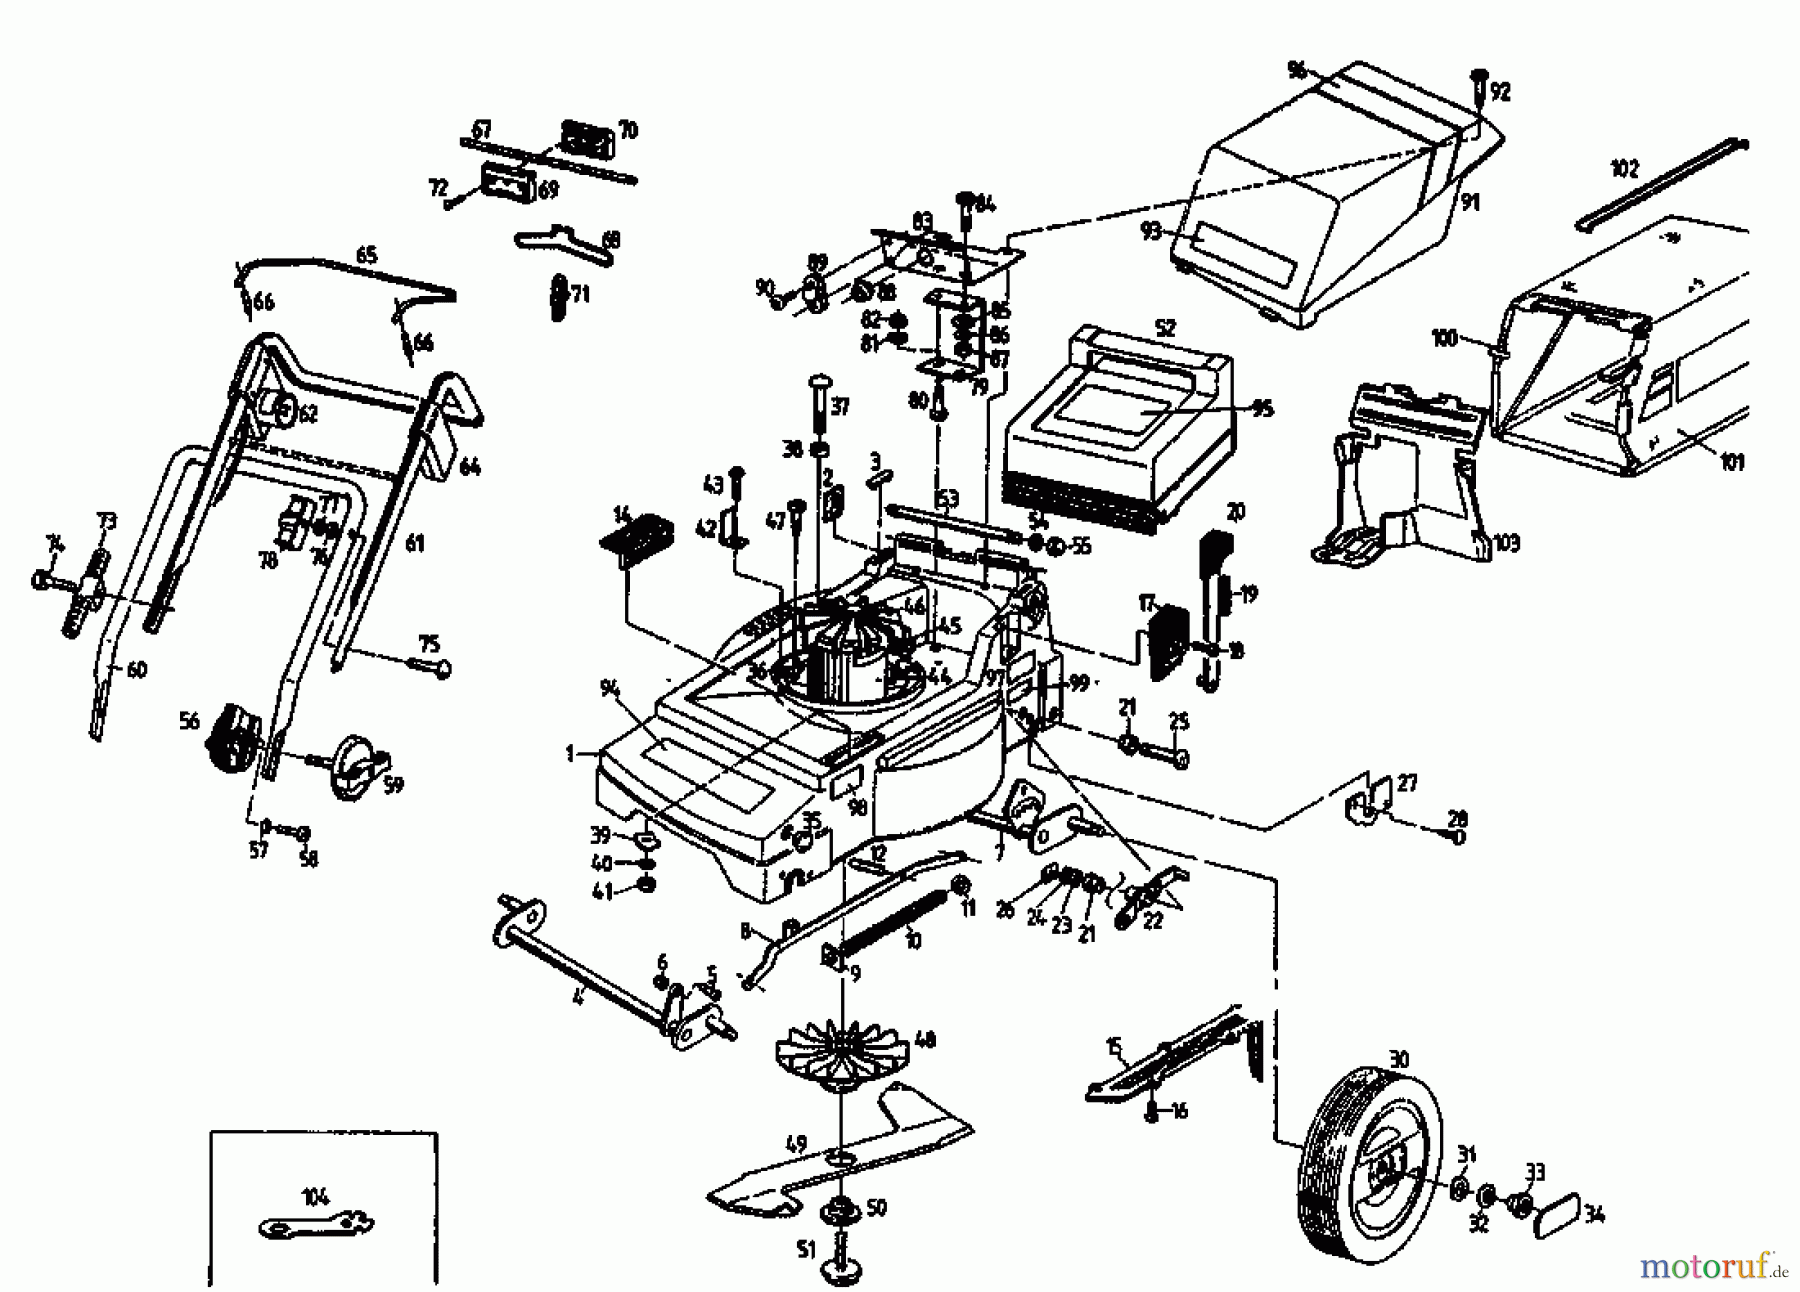  Gutbrod Electric mower MHE 400 04019.01  (1994) Basic machine